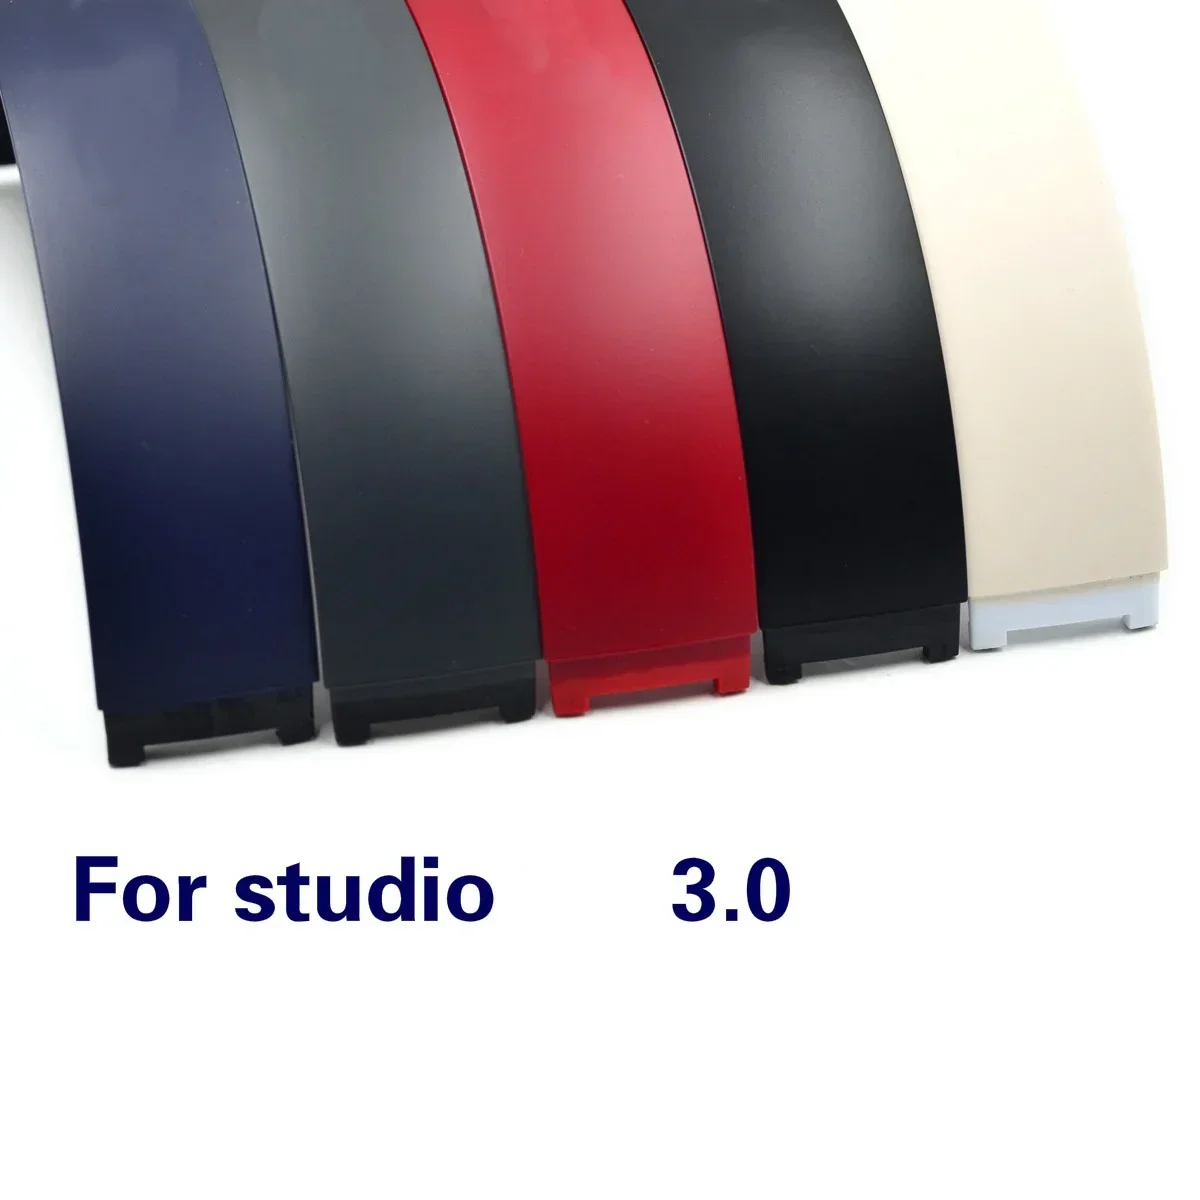 For Studio 3.0 Repair Parts Replacement Headphone Headband Headset Plastic Shell for Beats Studio 3.0 for Studio3 Headphone